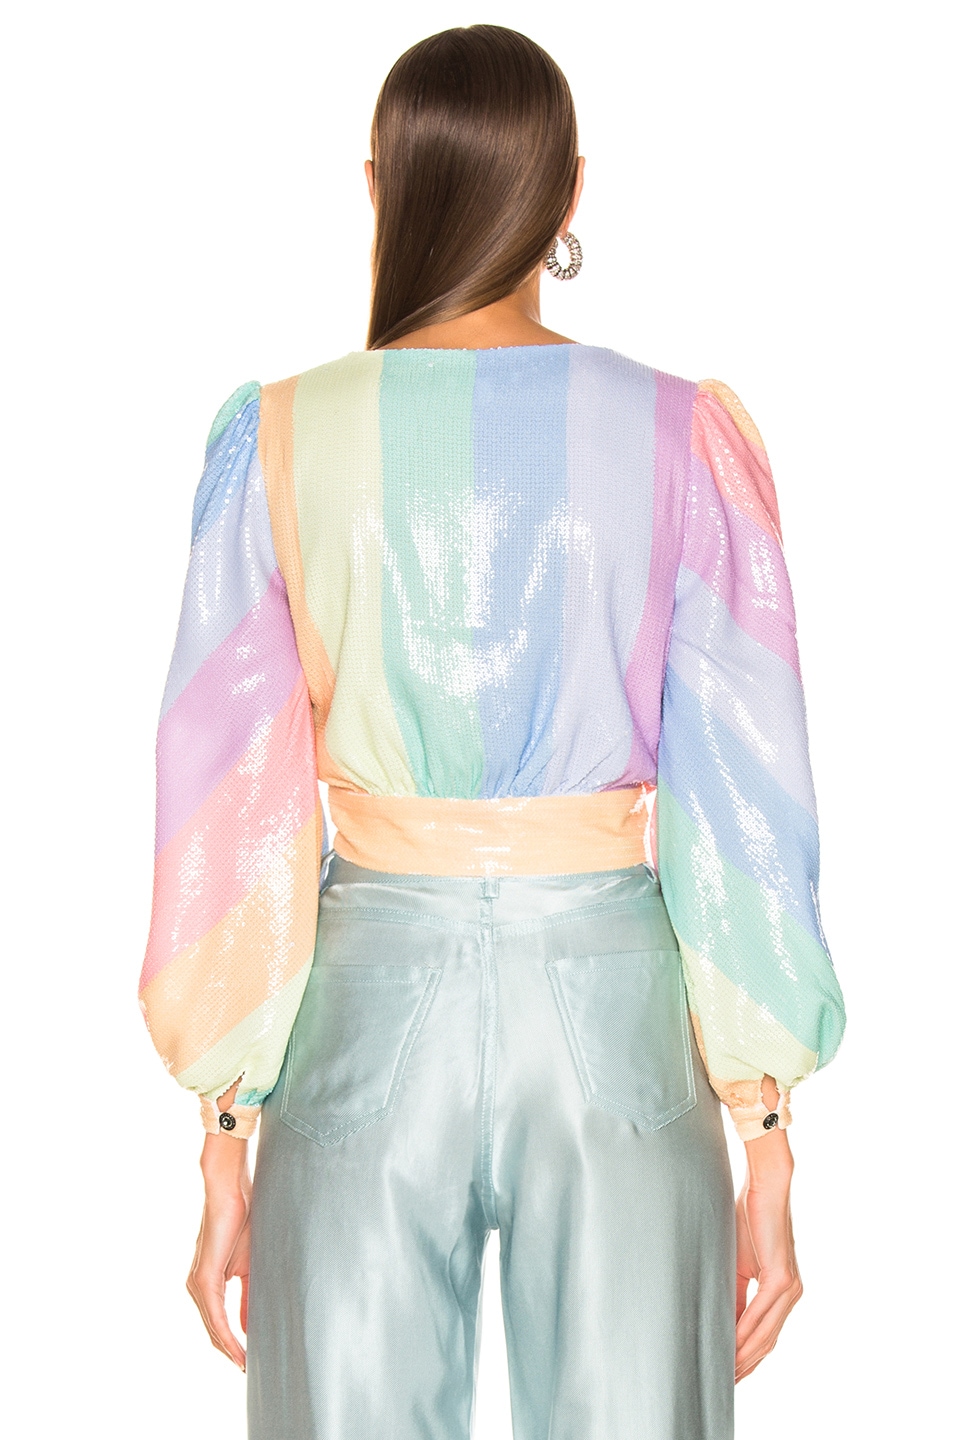 Olivia Rubin for FWRD Kendall Top in Pastel Rainbow | FWRD